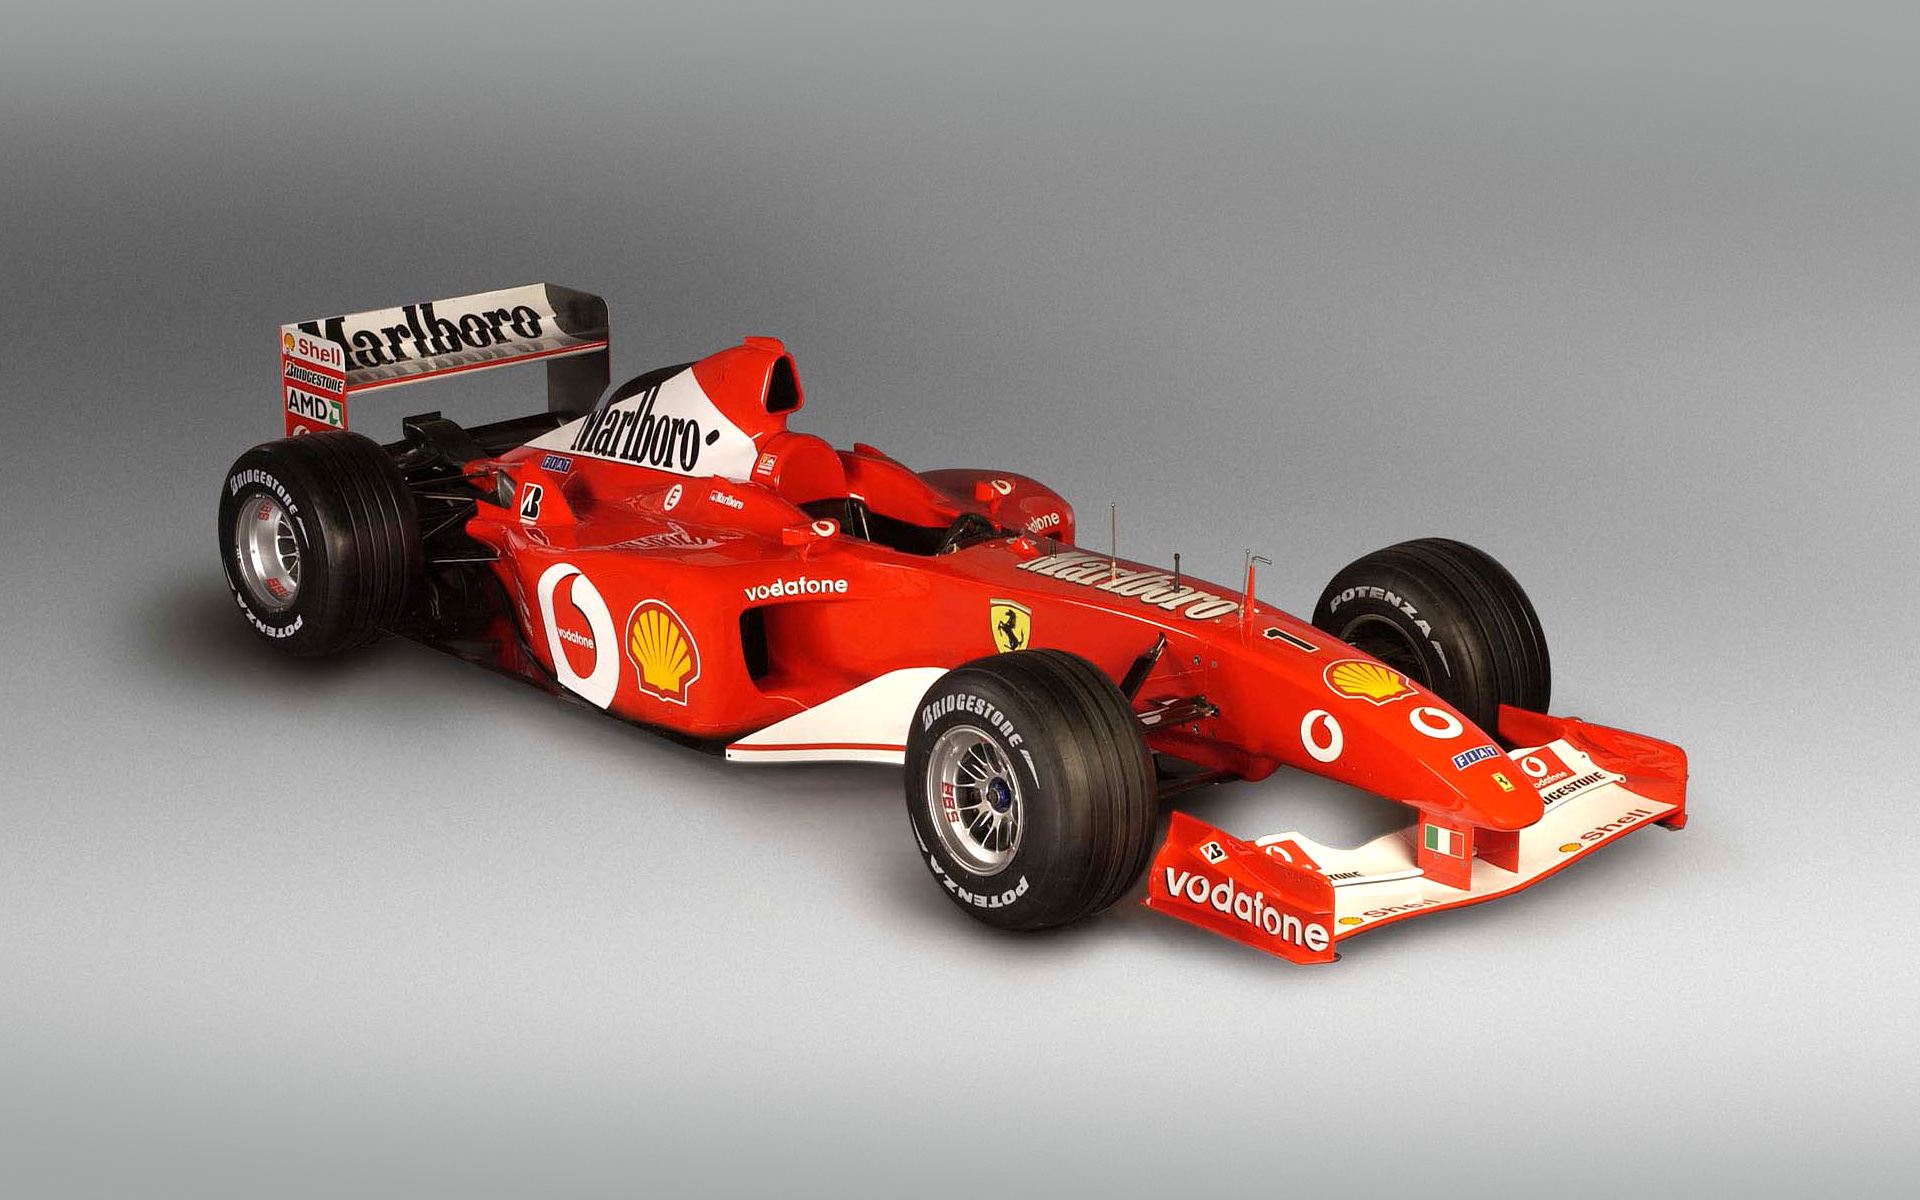  2002 Ferrari F2002 Wallpaper.